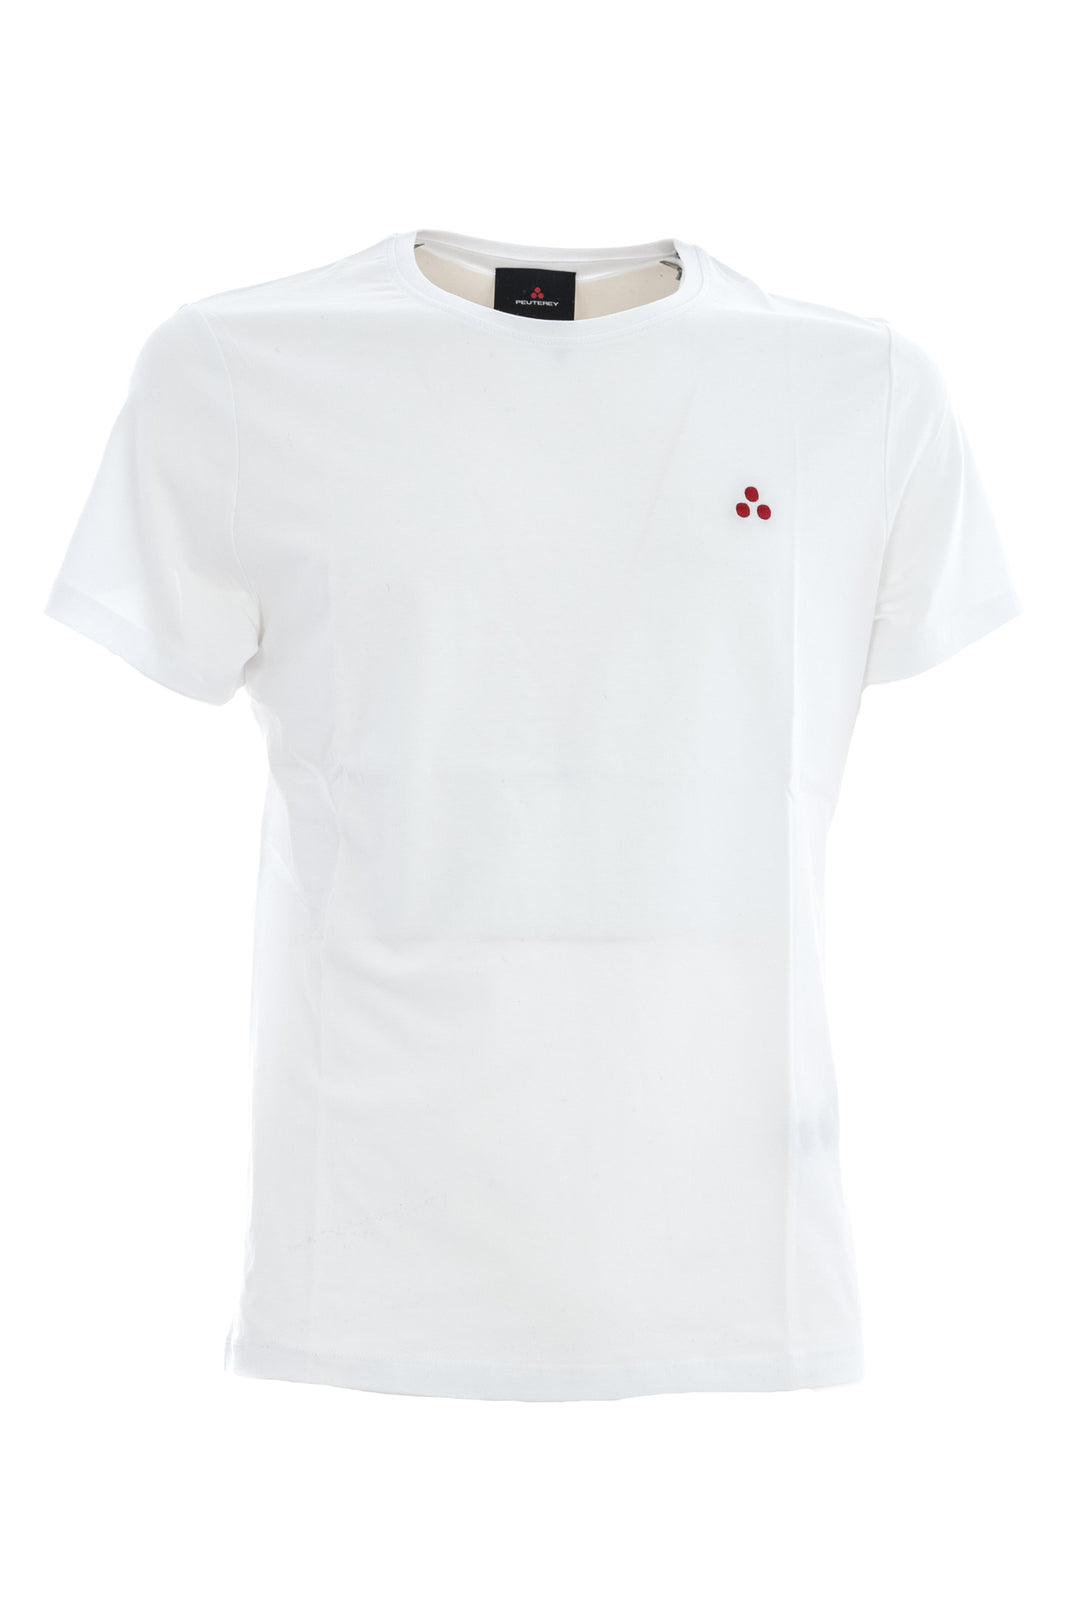 PEUTEREY T-shirt con logo ricamato bianca - Mancinelli 1954